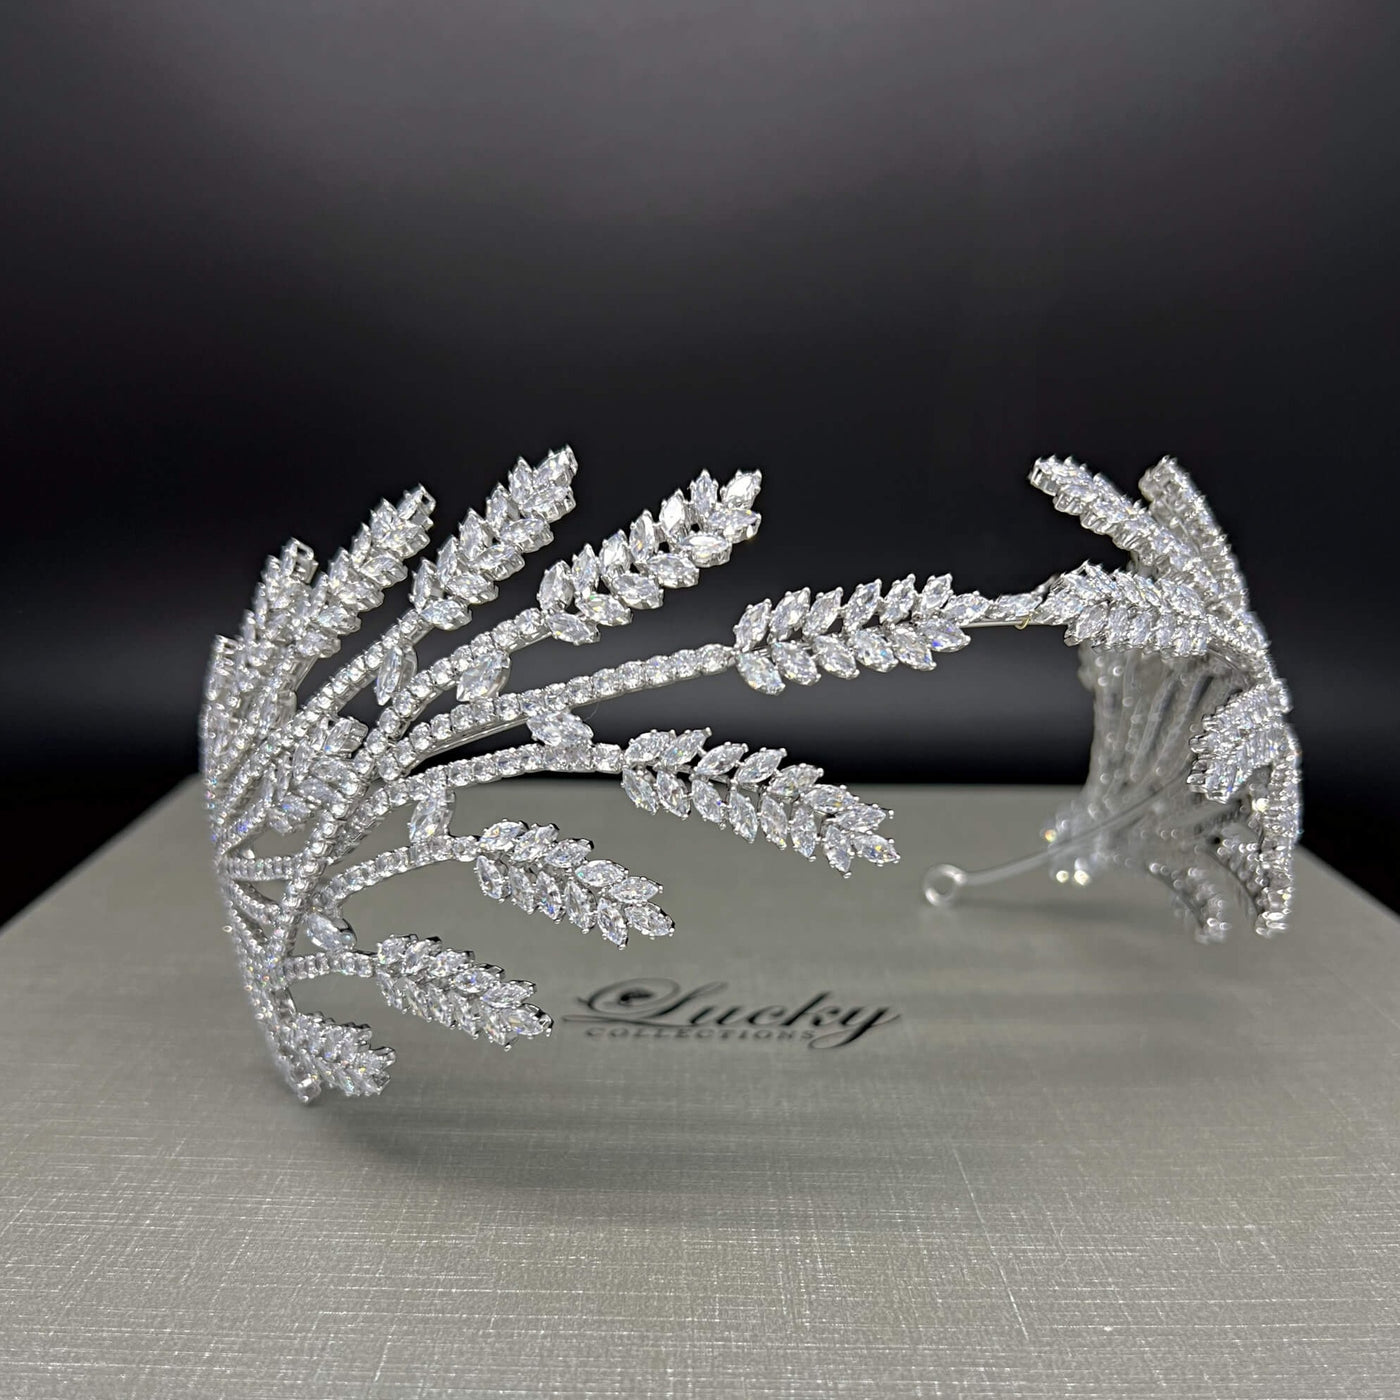 Bridal Headband, Quinceanera Headband, Headpiece for Bride, Glamorous and Sparkly